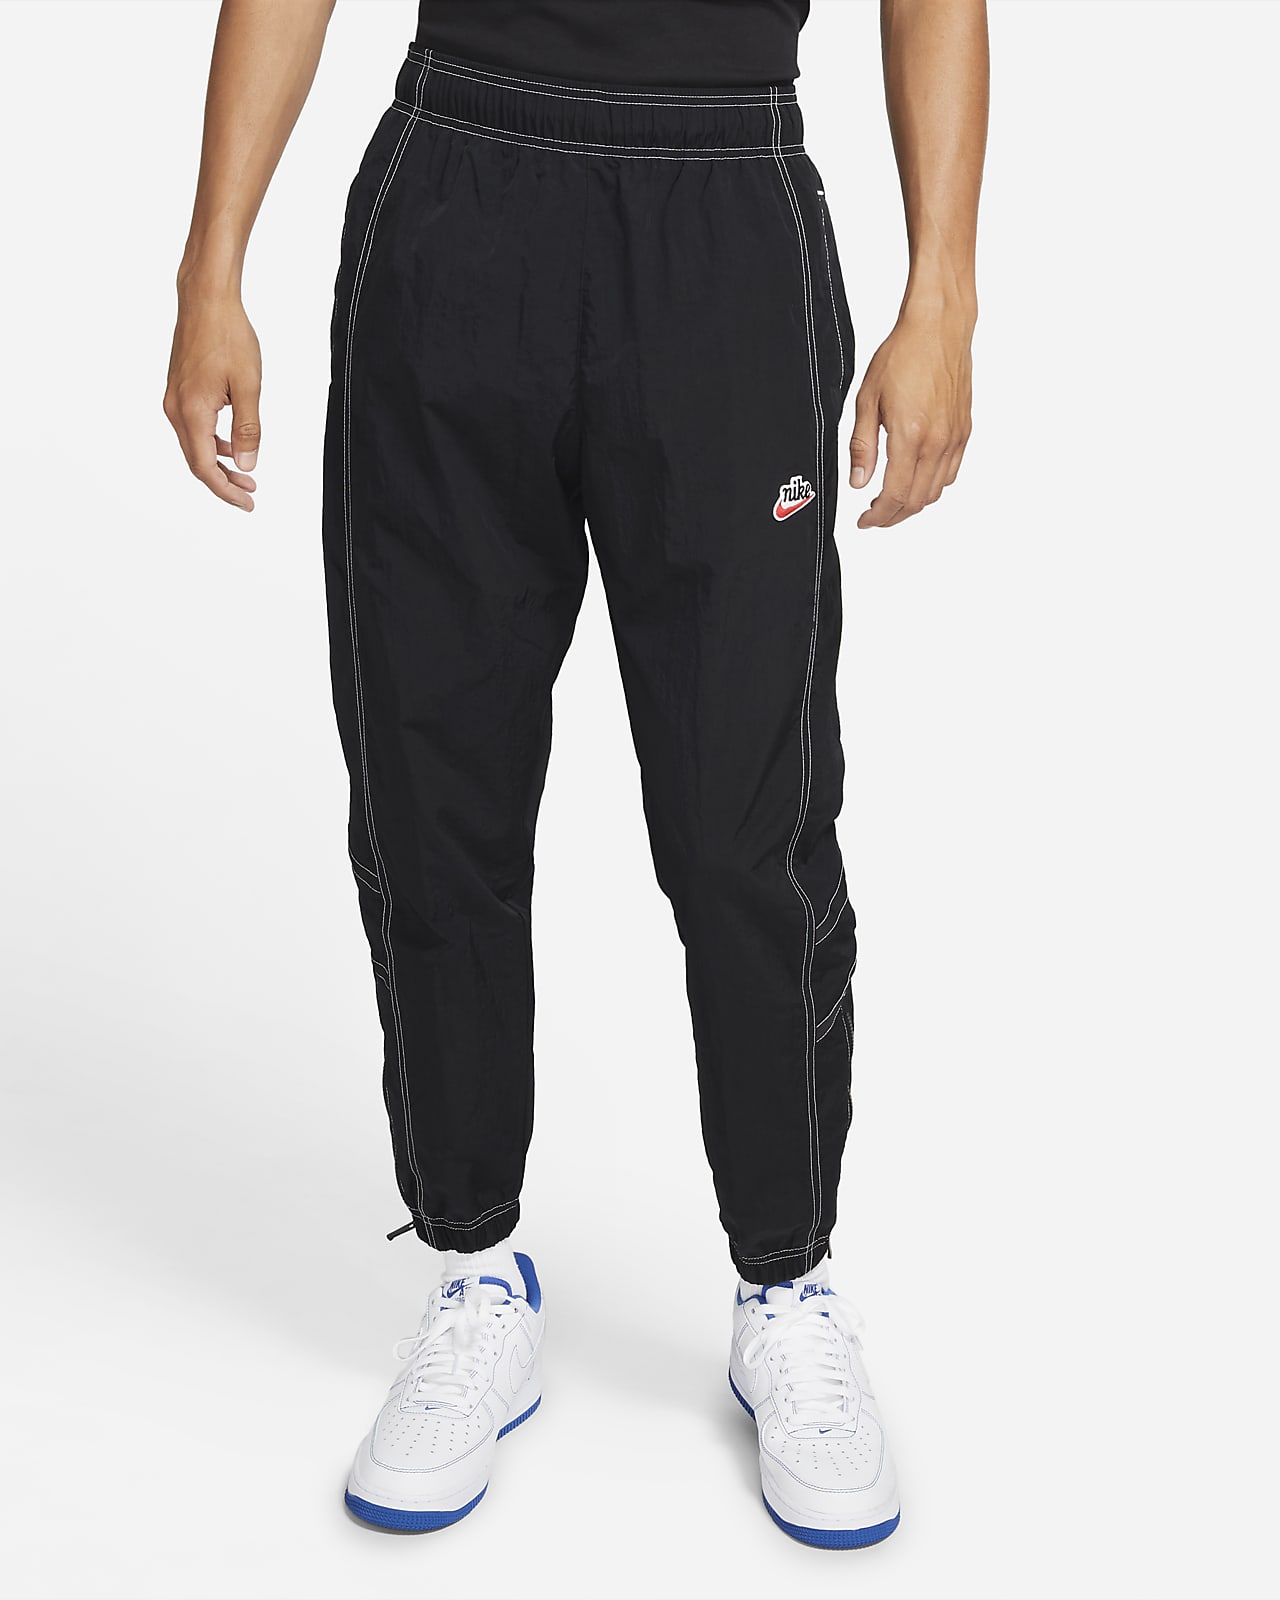 Nike Sportswear Men's Woven Pant